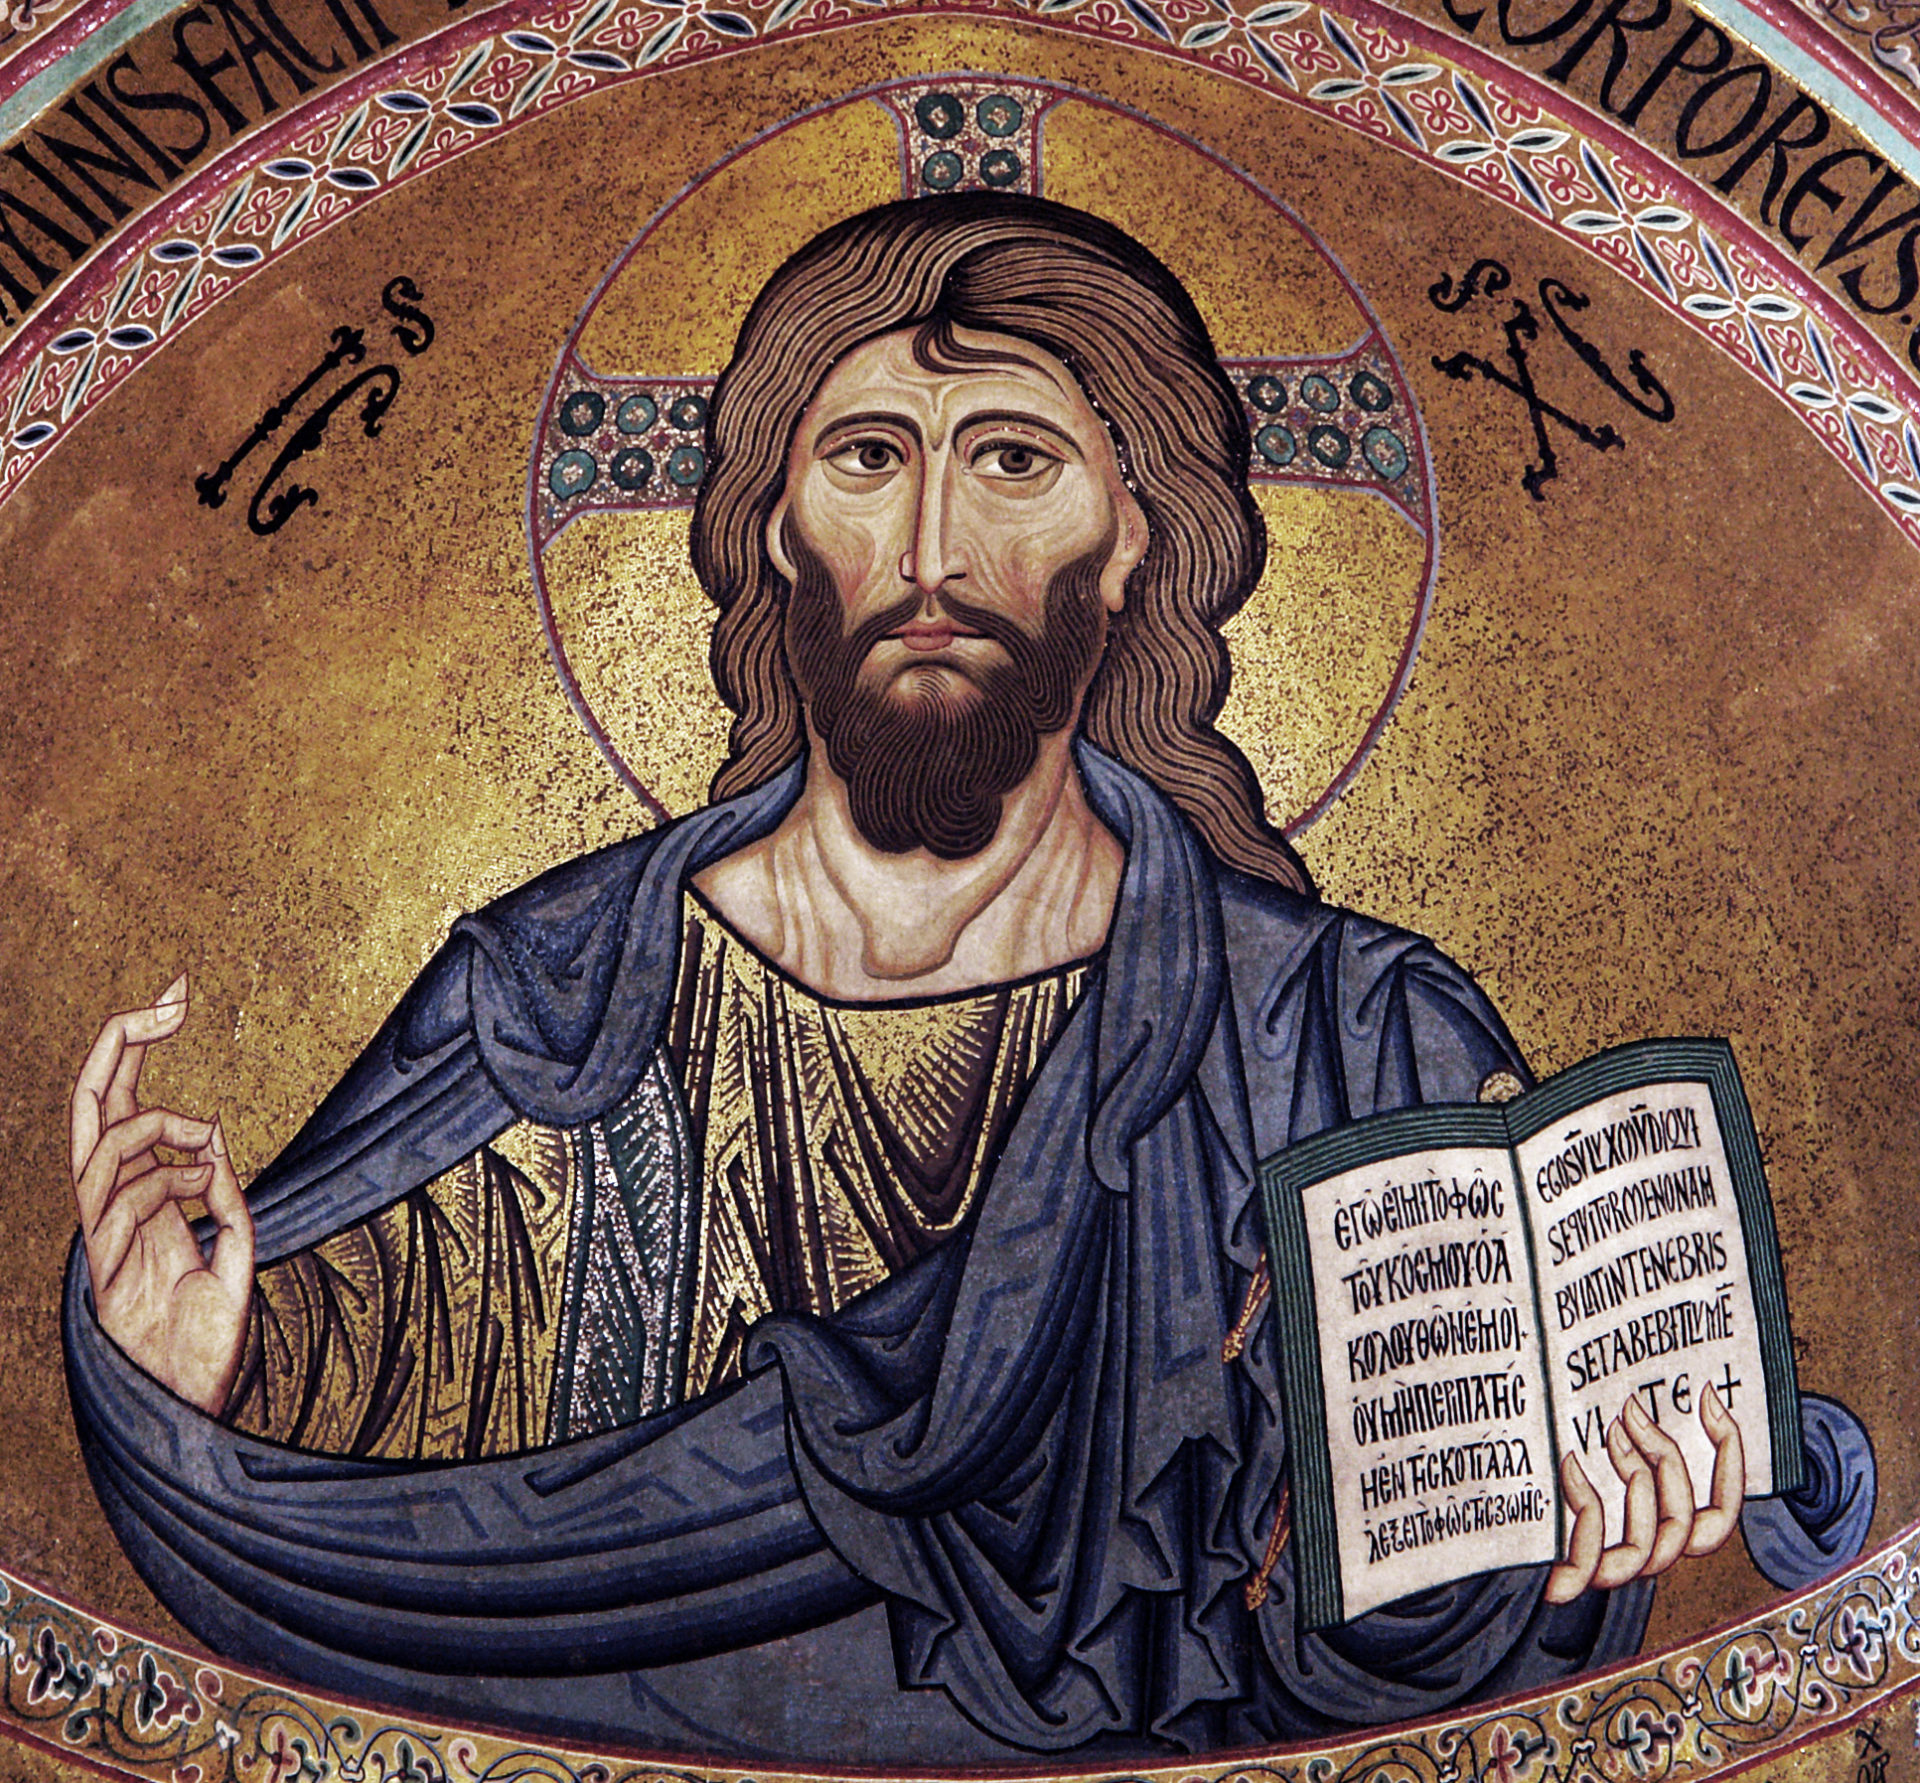 Jesus Christus: Andreas Wahra [CC BY-SA 3.0 (http://creativecommons.org/licenses/by-sa/3.0/)]